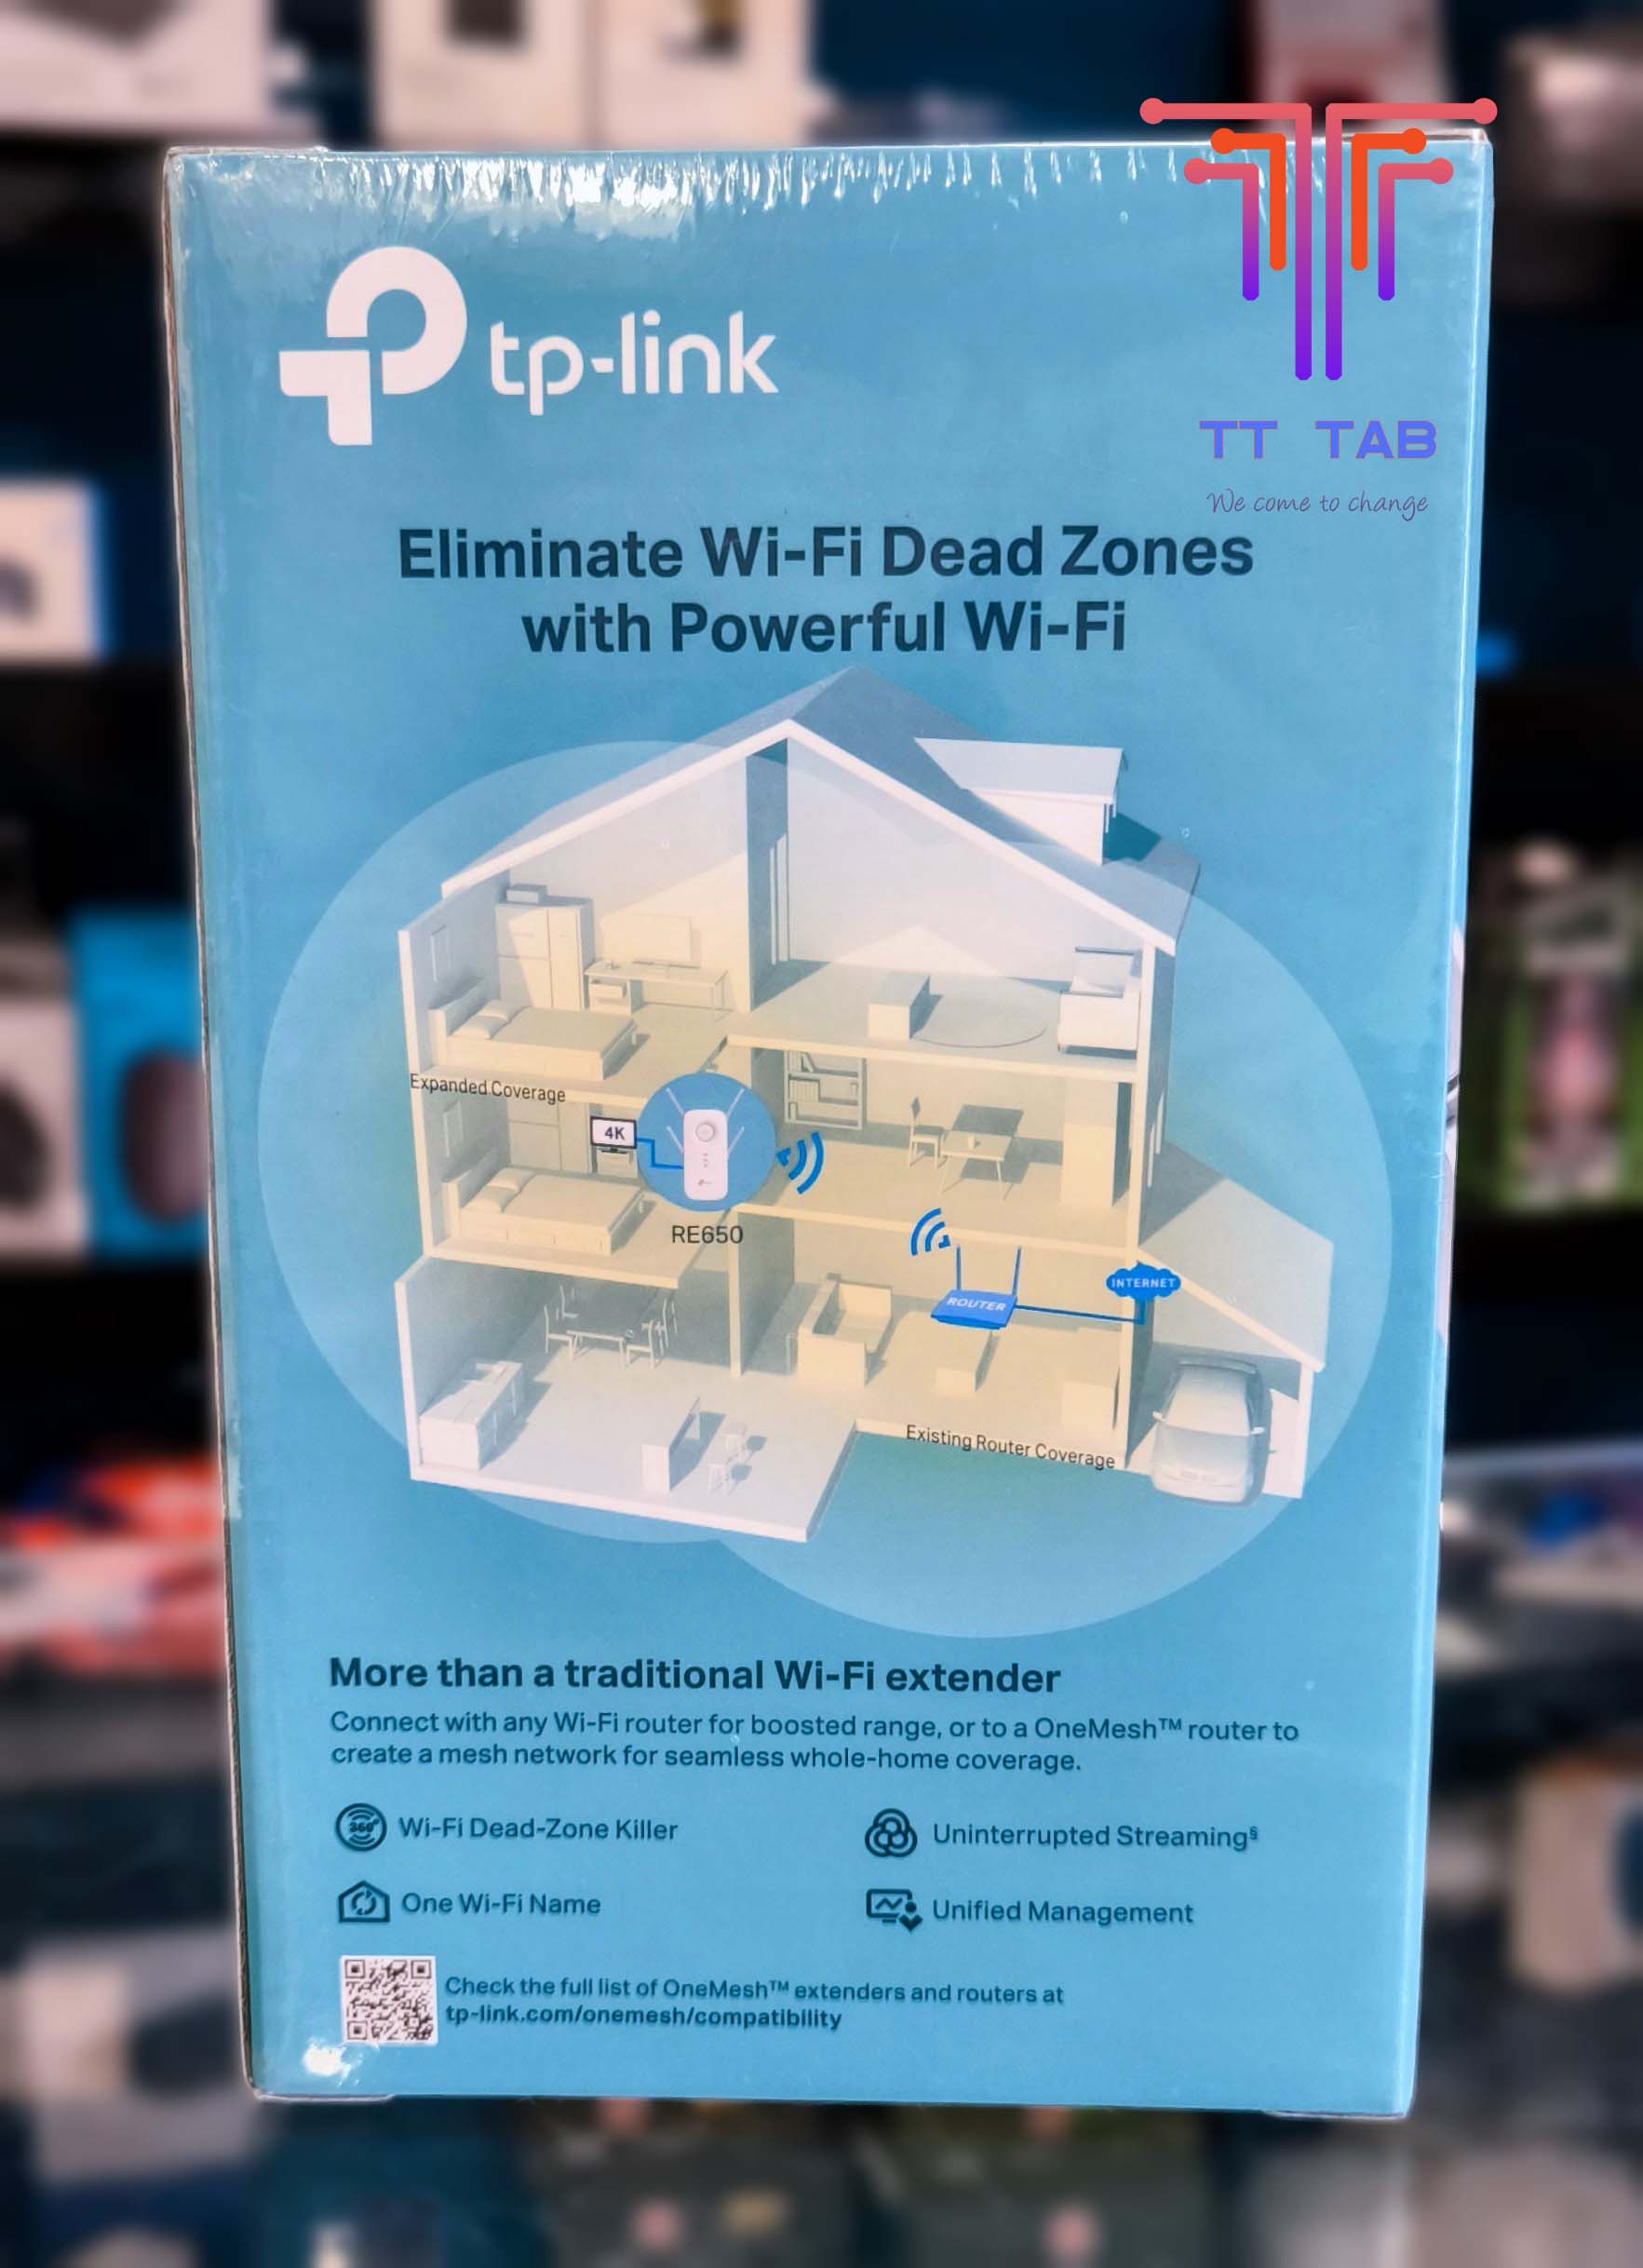 TP-Link RE650 AC2600 Wi-Fi Range Extender